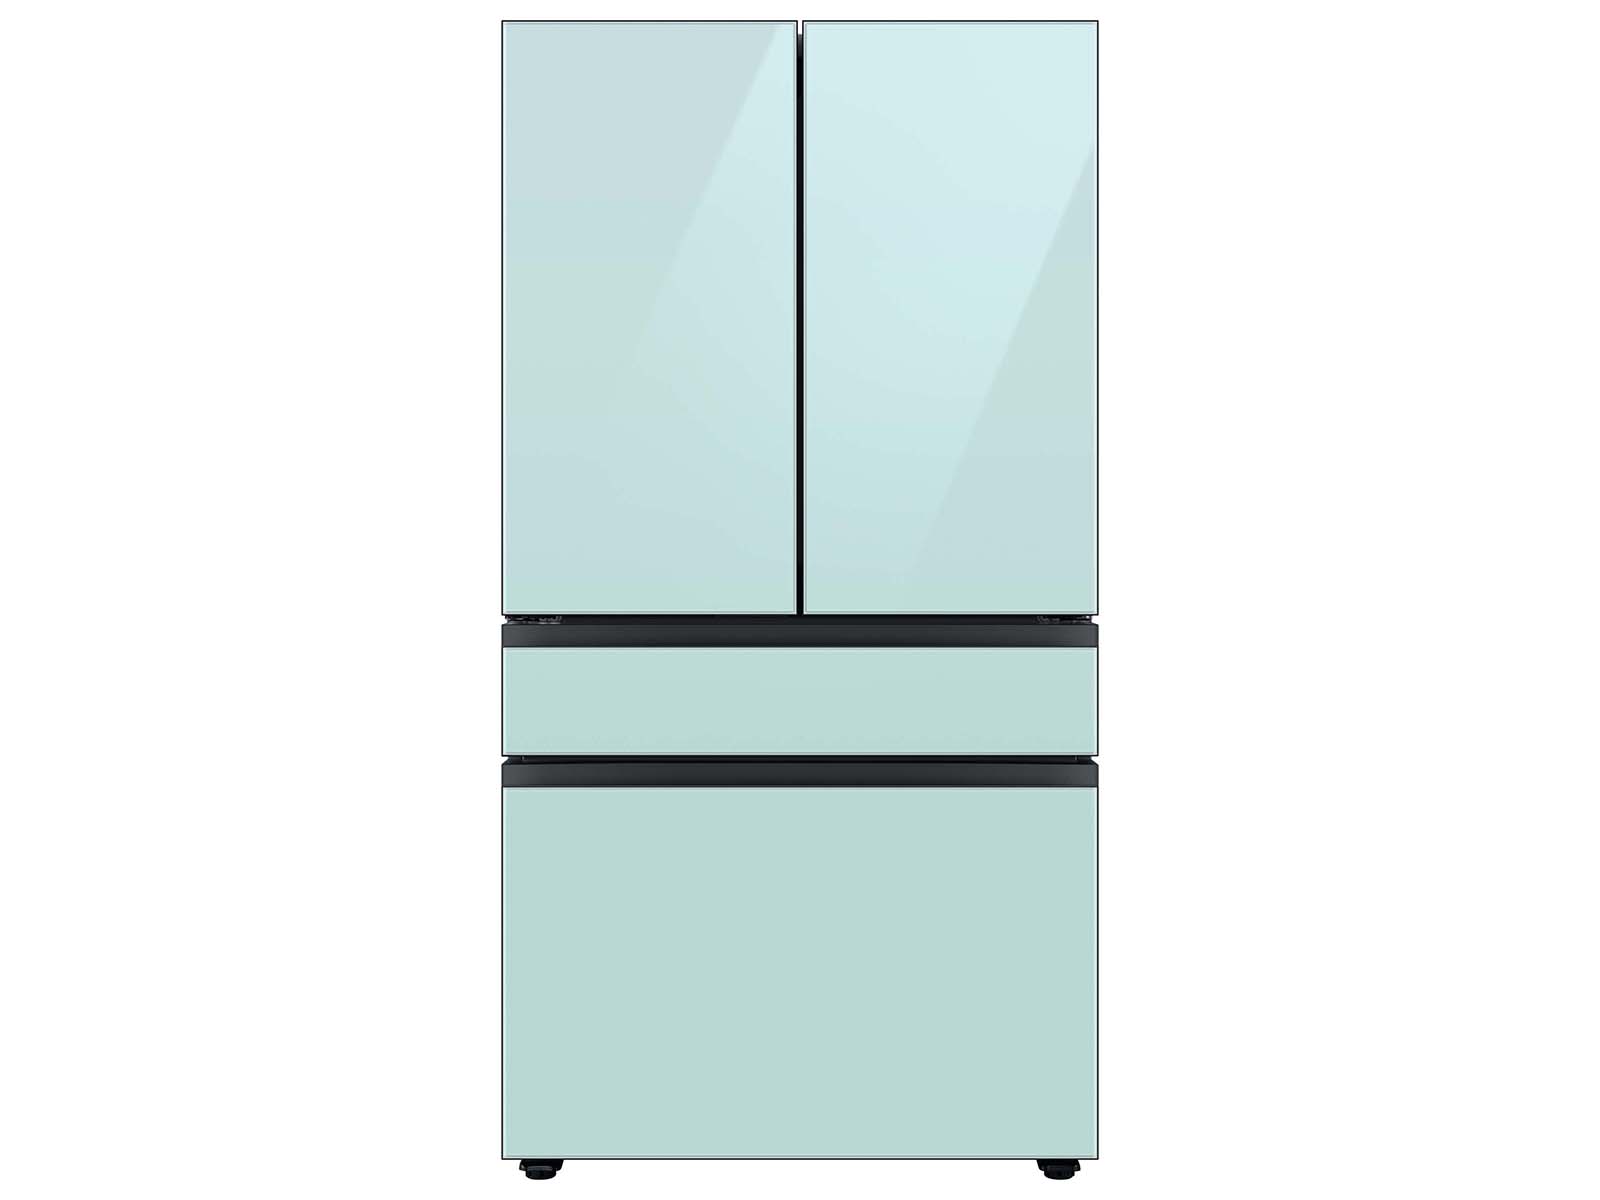 Samsung Refrigerator – BESPOKE